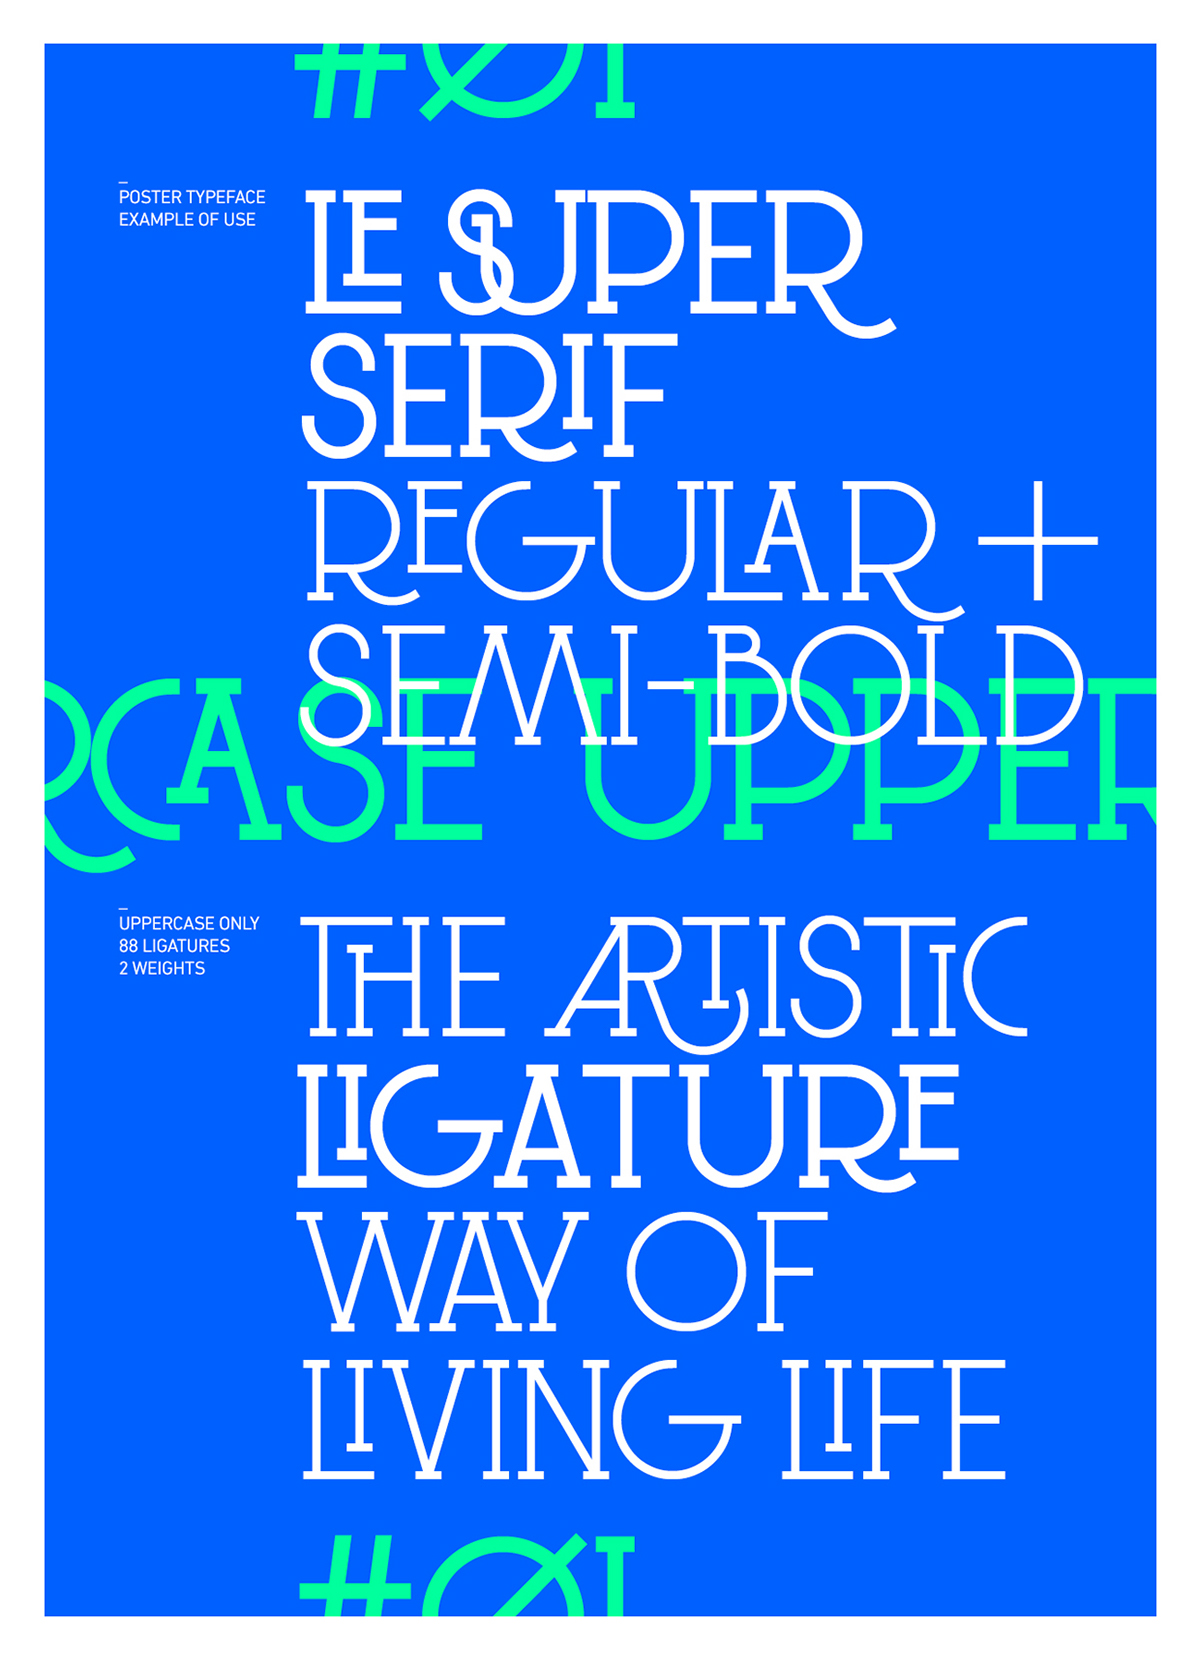 typedesign Typeface free font Ligatures dutch thijs janssen Rotterdam serif